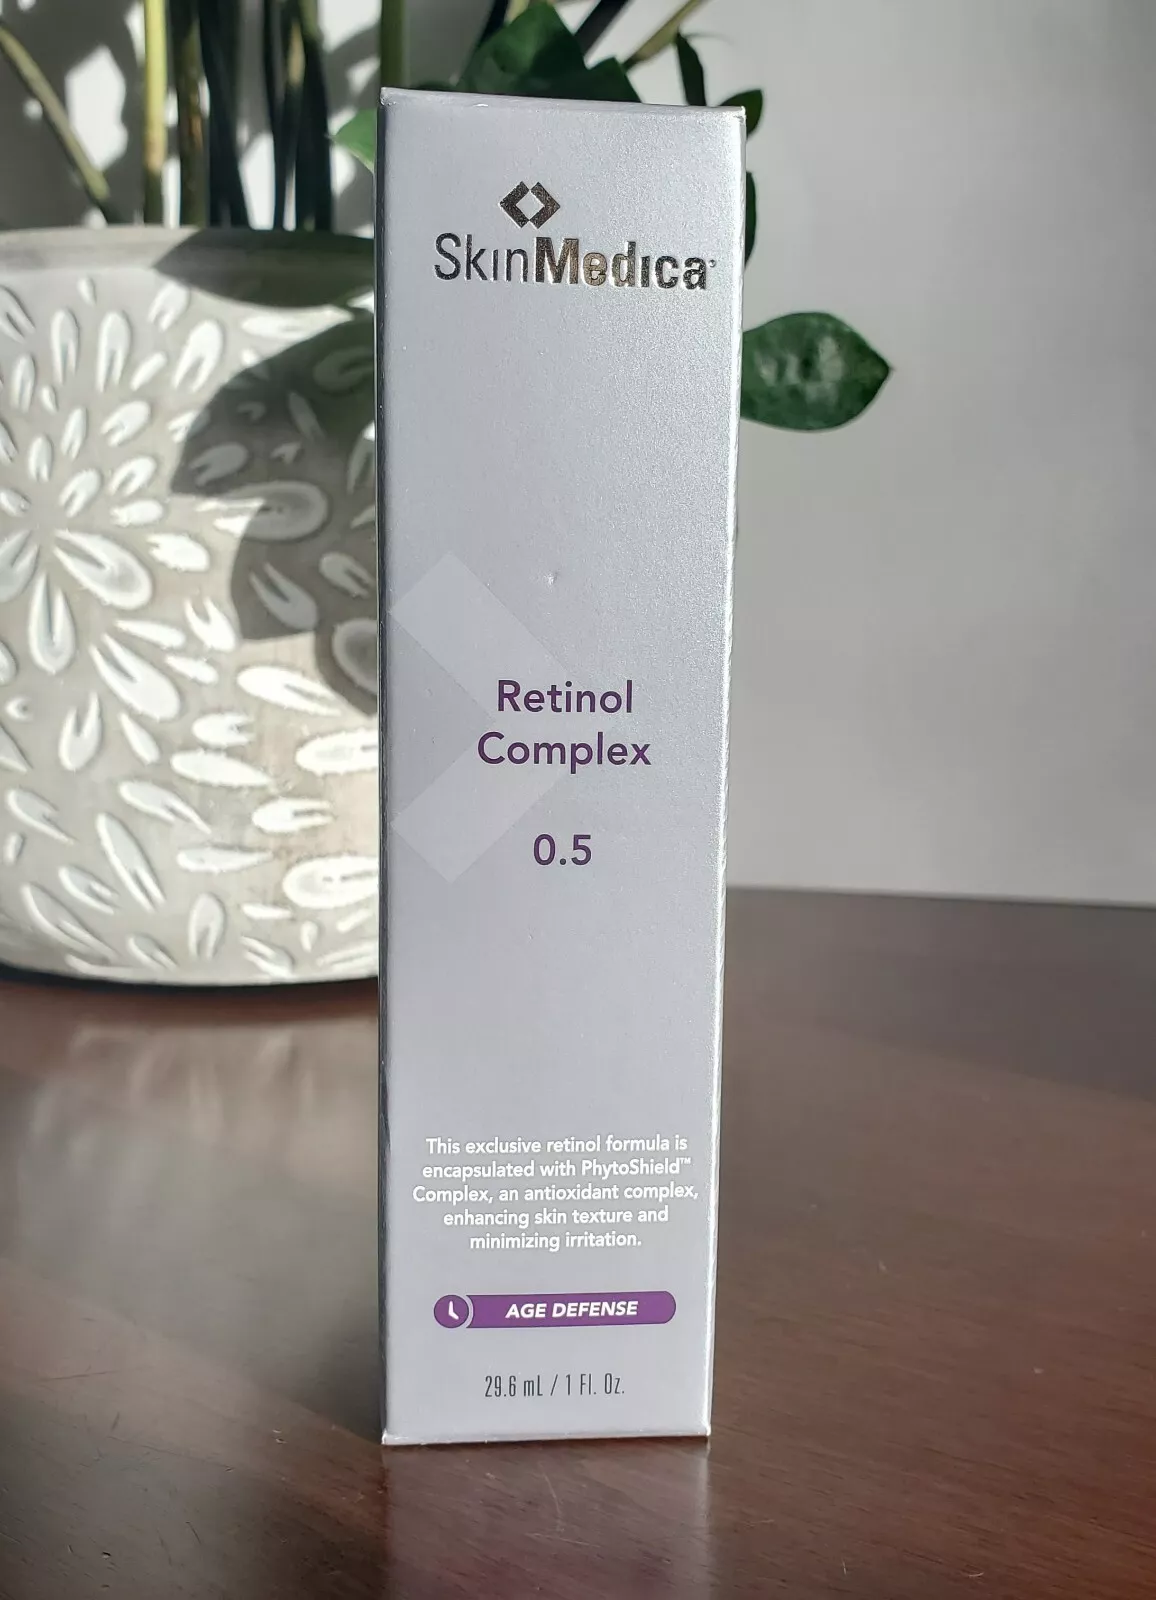 SkinMedica RETINOL COMPLEX 0.5 - 29.6 ml / 1 fl oz. - Sealed Box  Super ... - $45.88